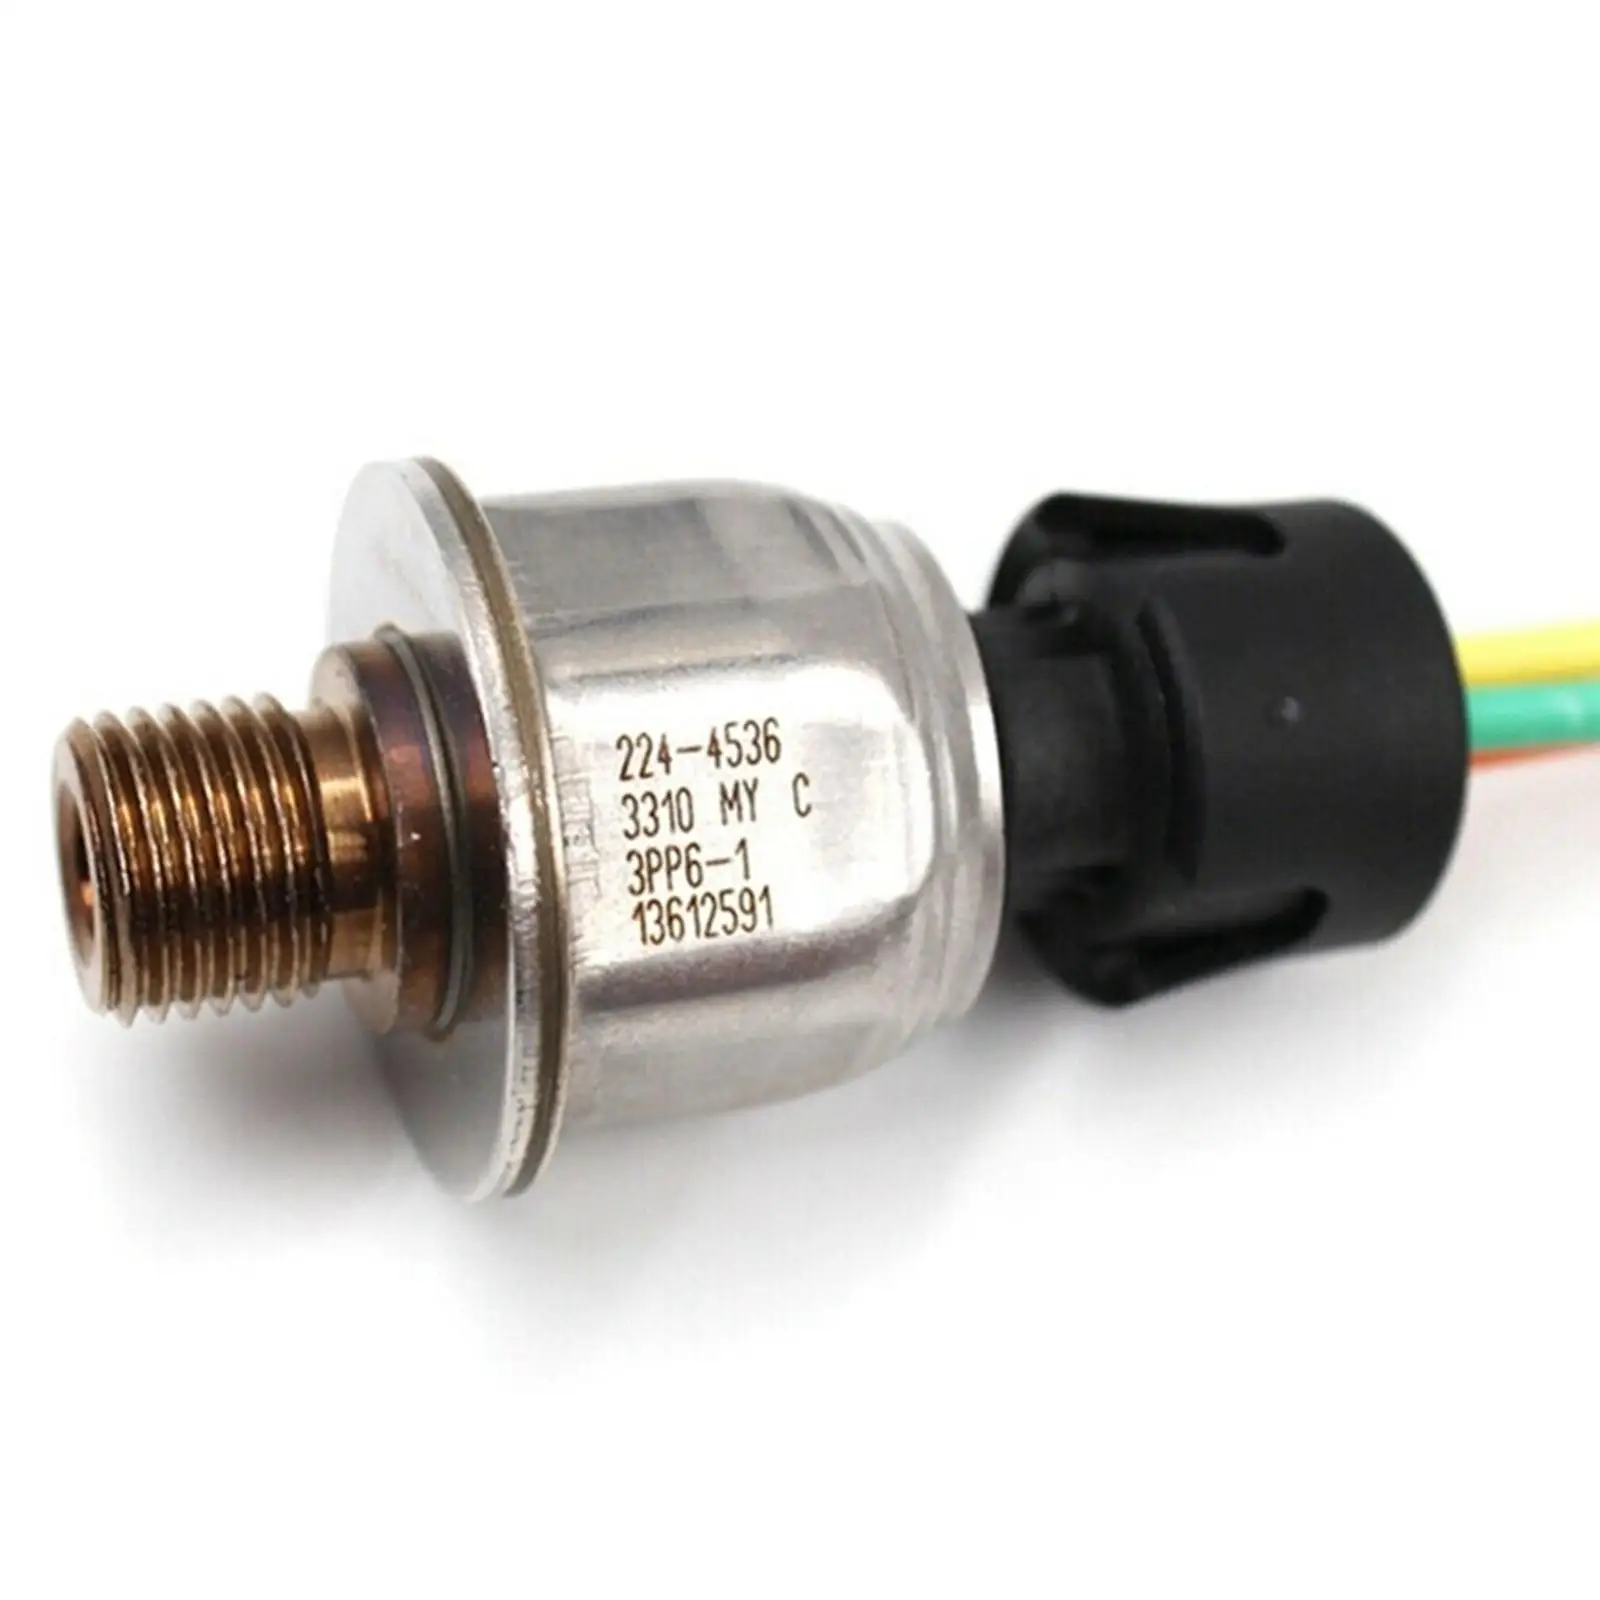 Fuel Oil Pressure Sensor 224-4536 Heavy Duty Fit for  C7 C9 3126 C15